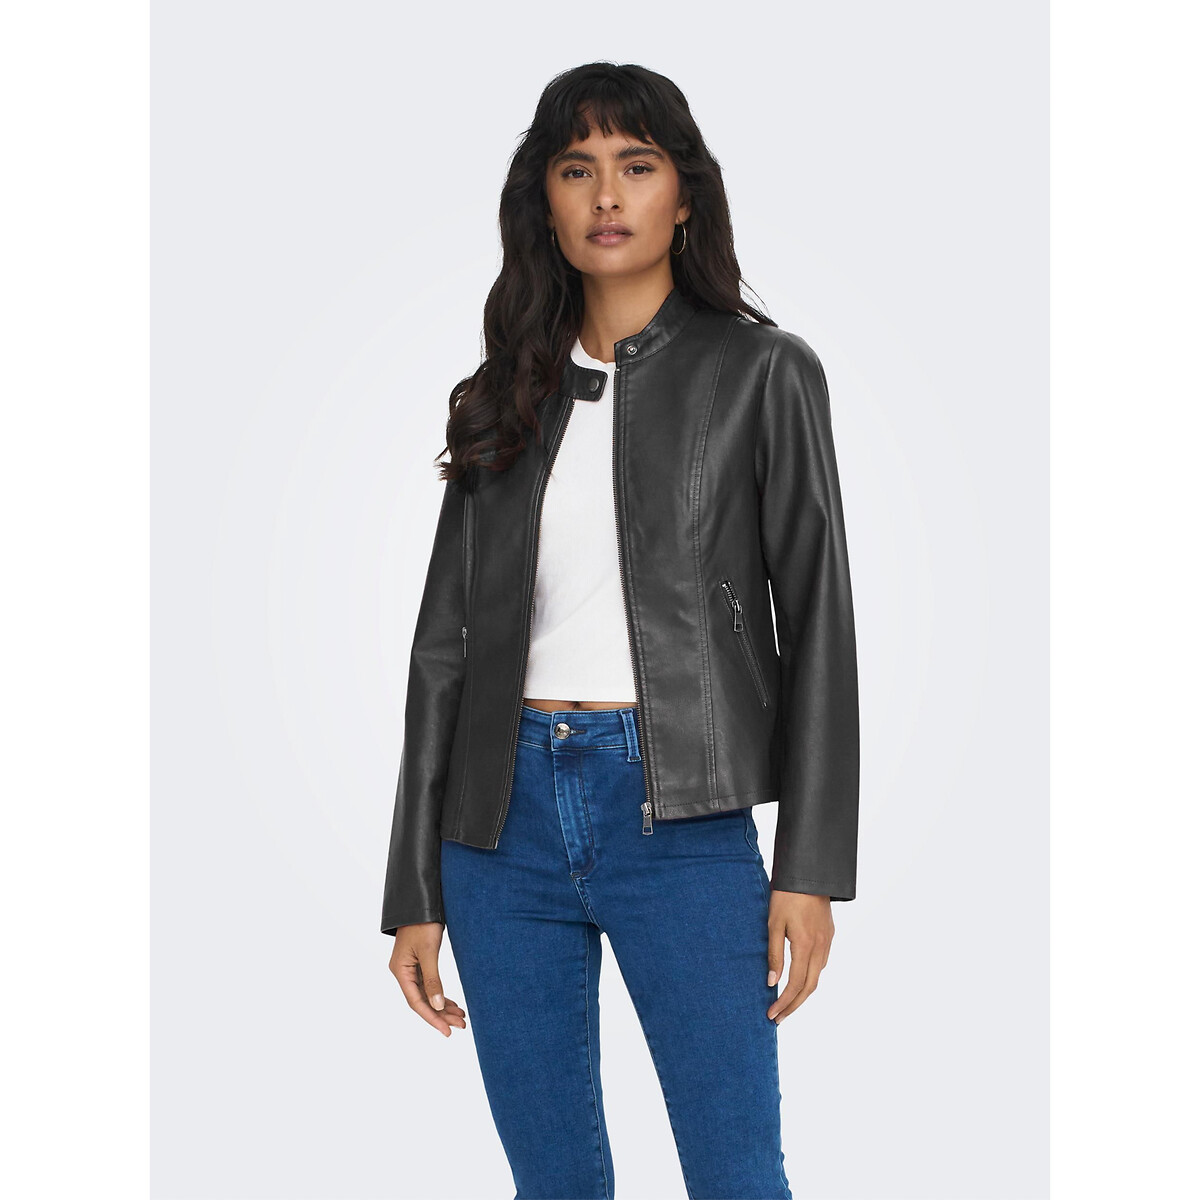 Faux leather short jacket, black, Only | La Redoute